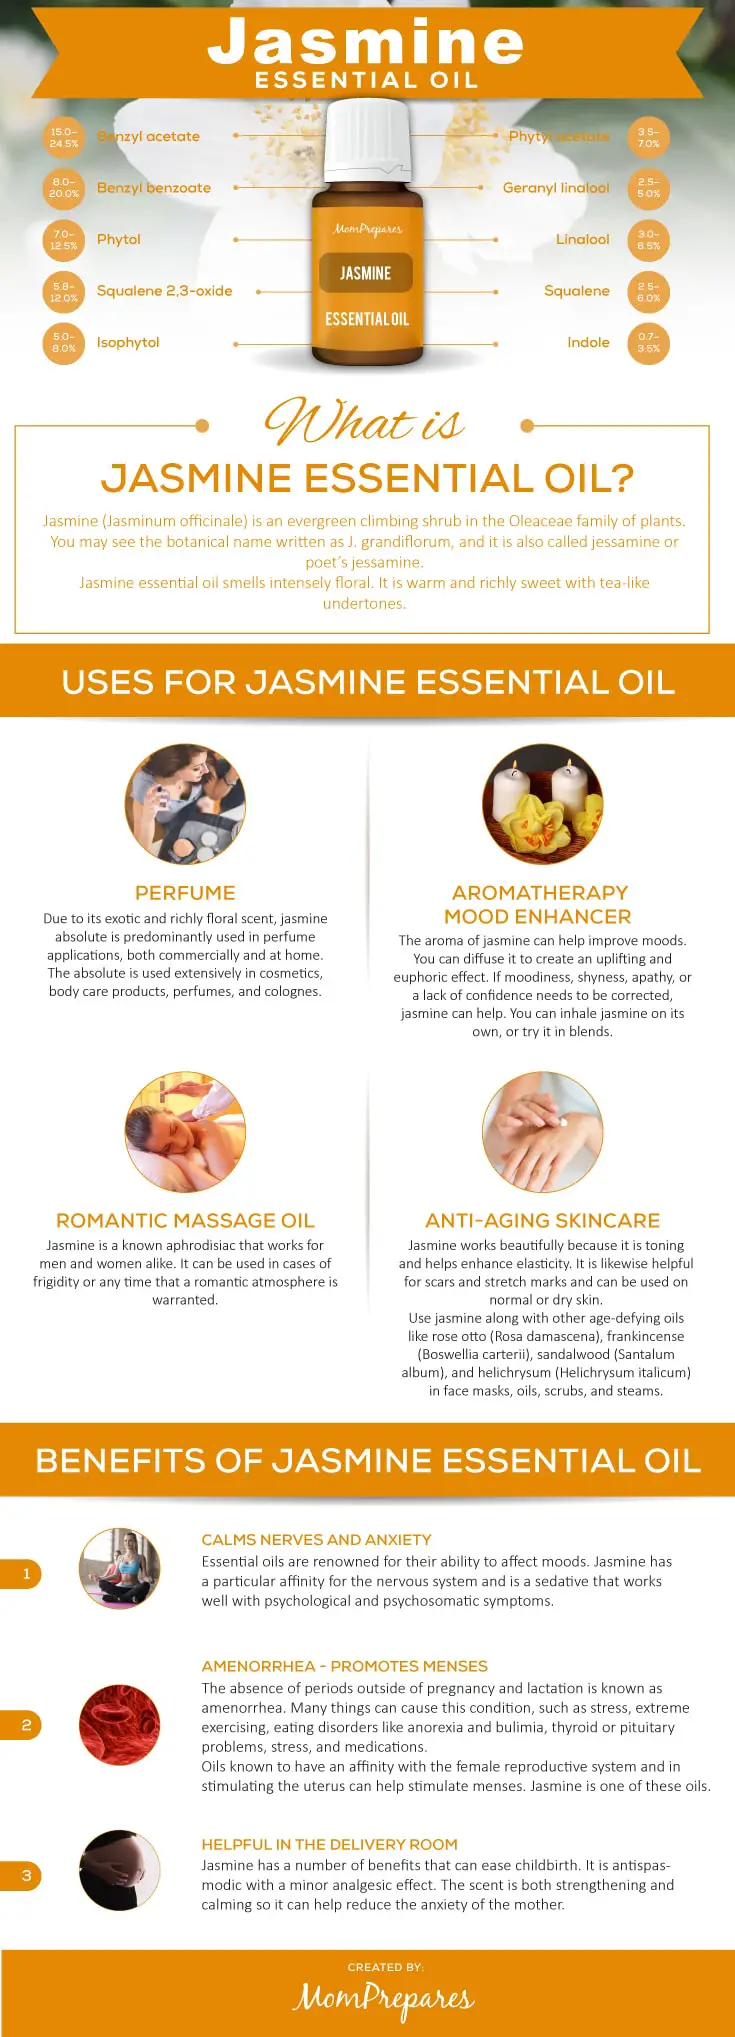 Jasmine infographic